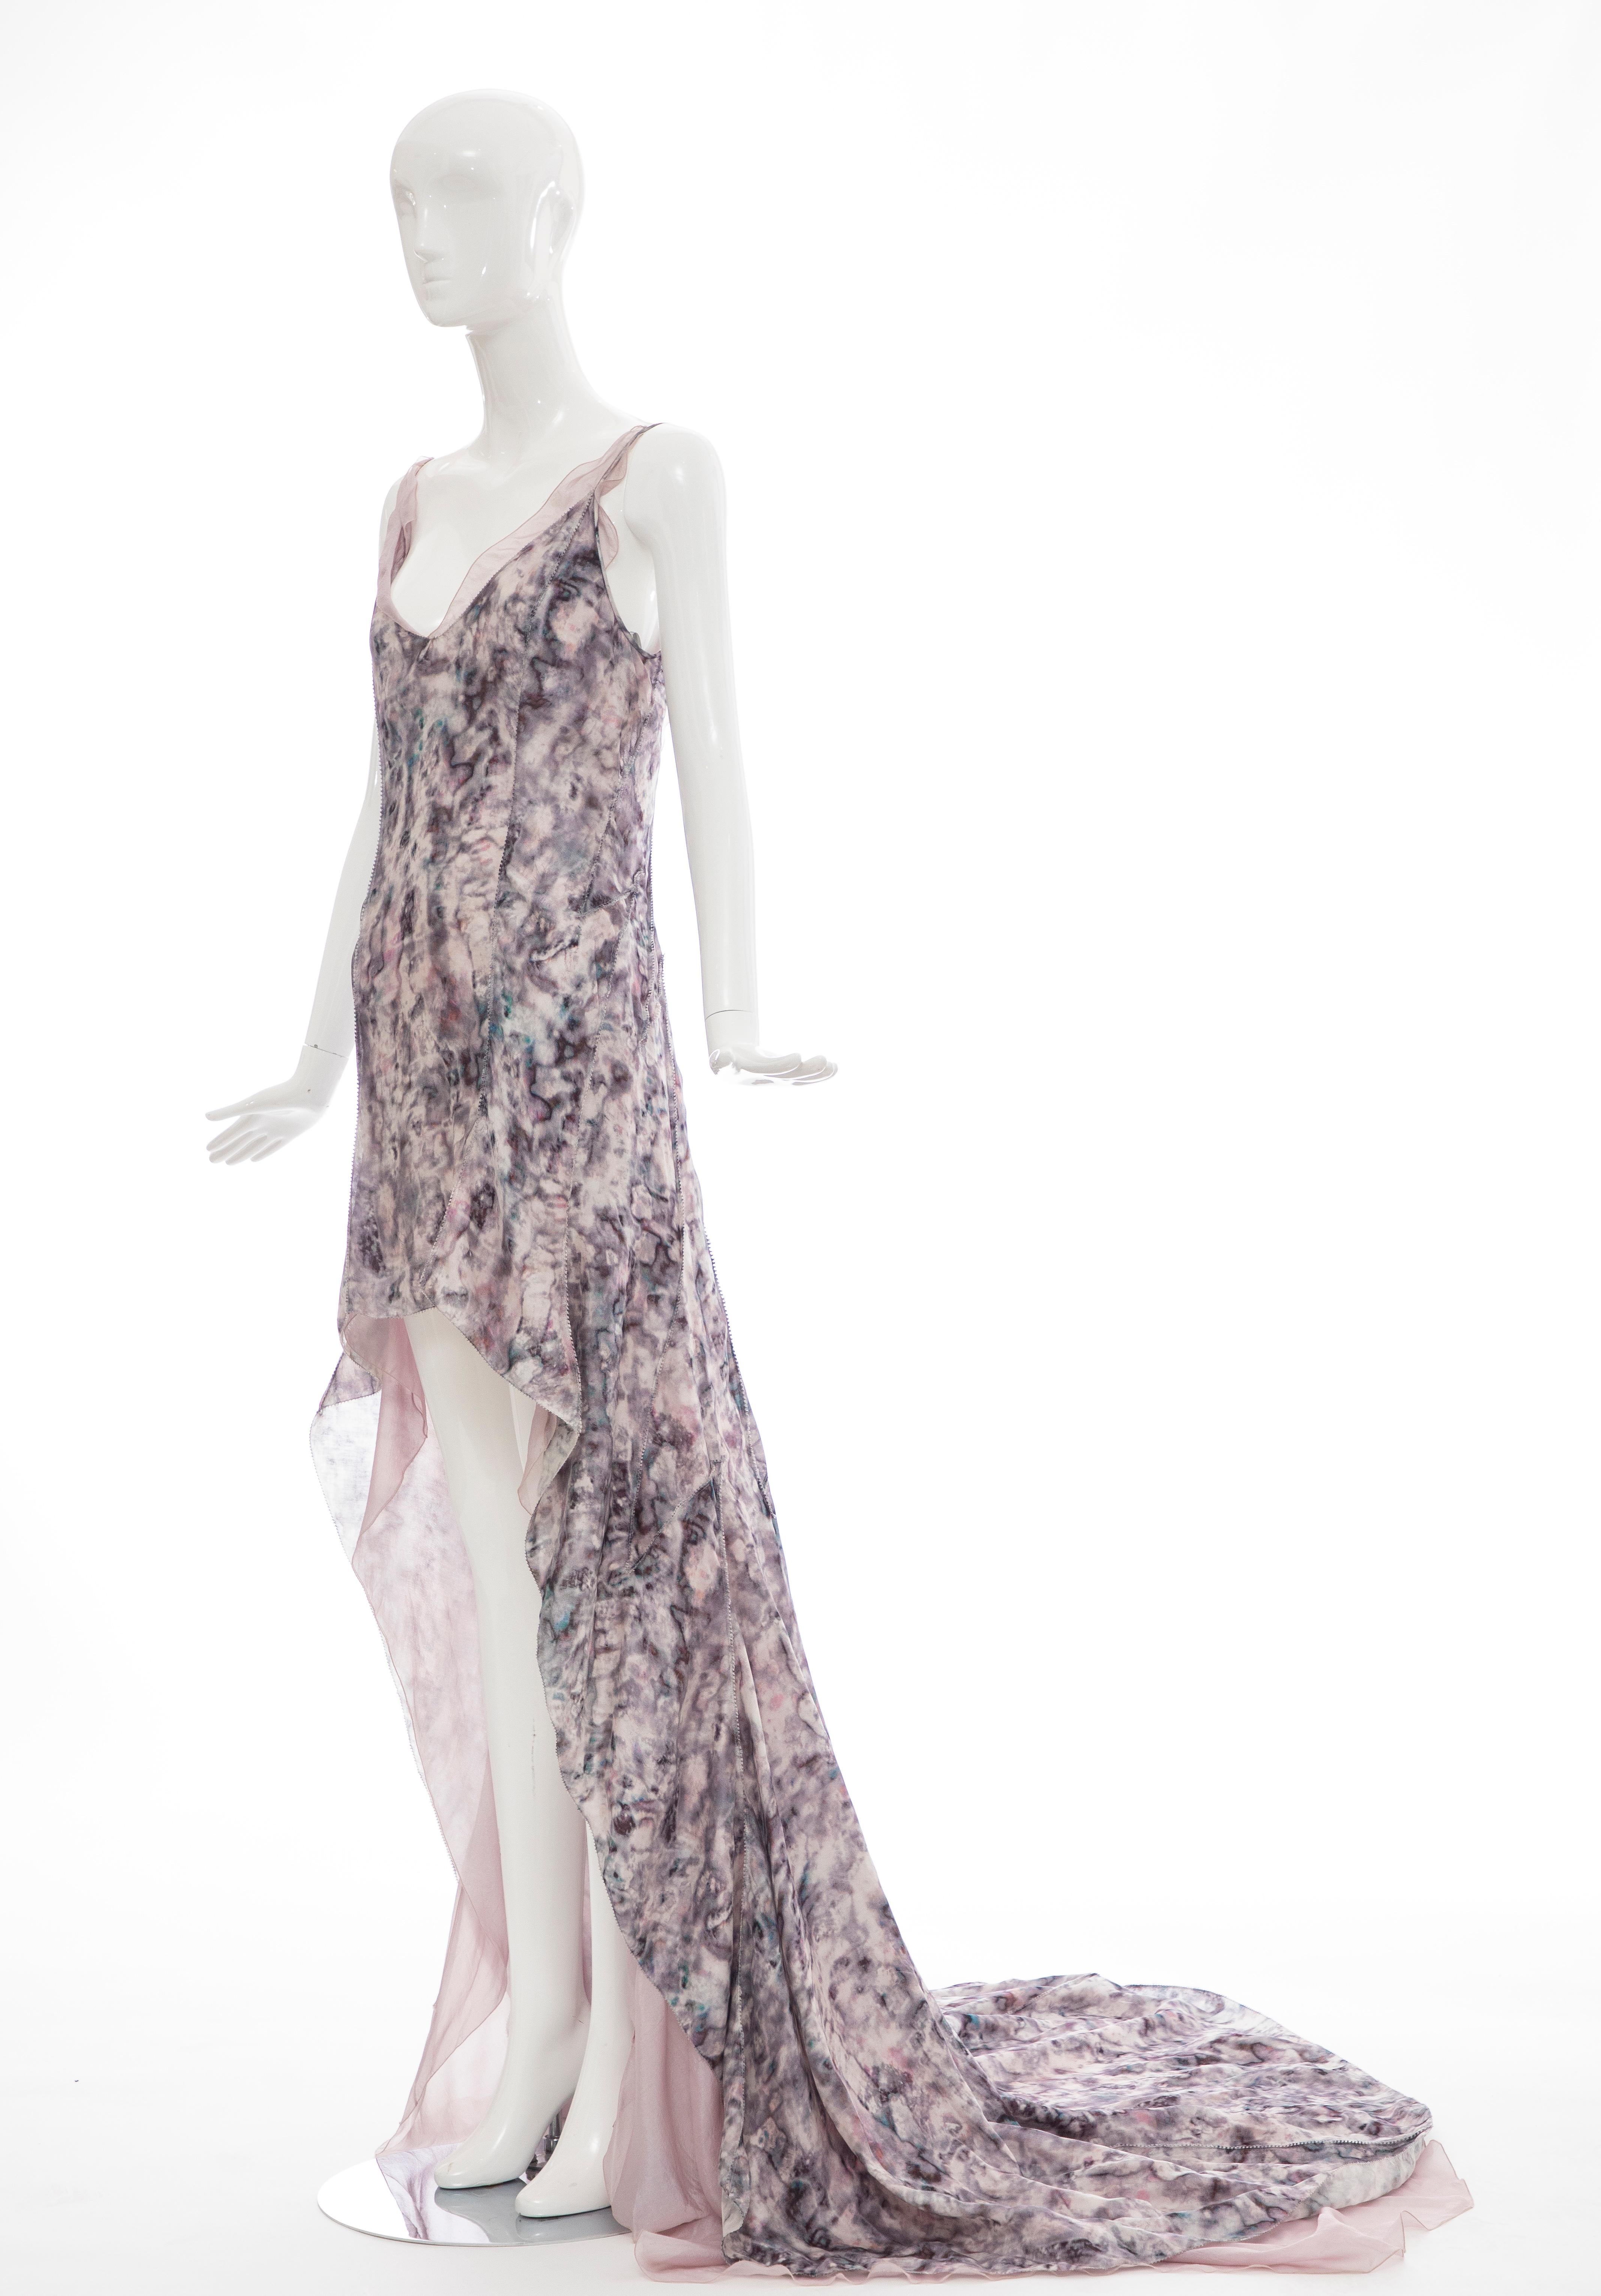  Olivier Theyskens for Nina Ricci Runway Silk Print Evening Dress, Spring 2009 3